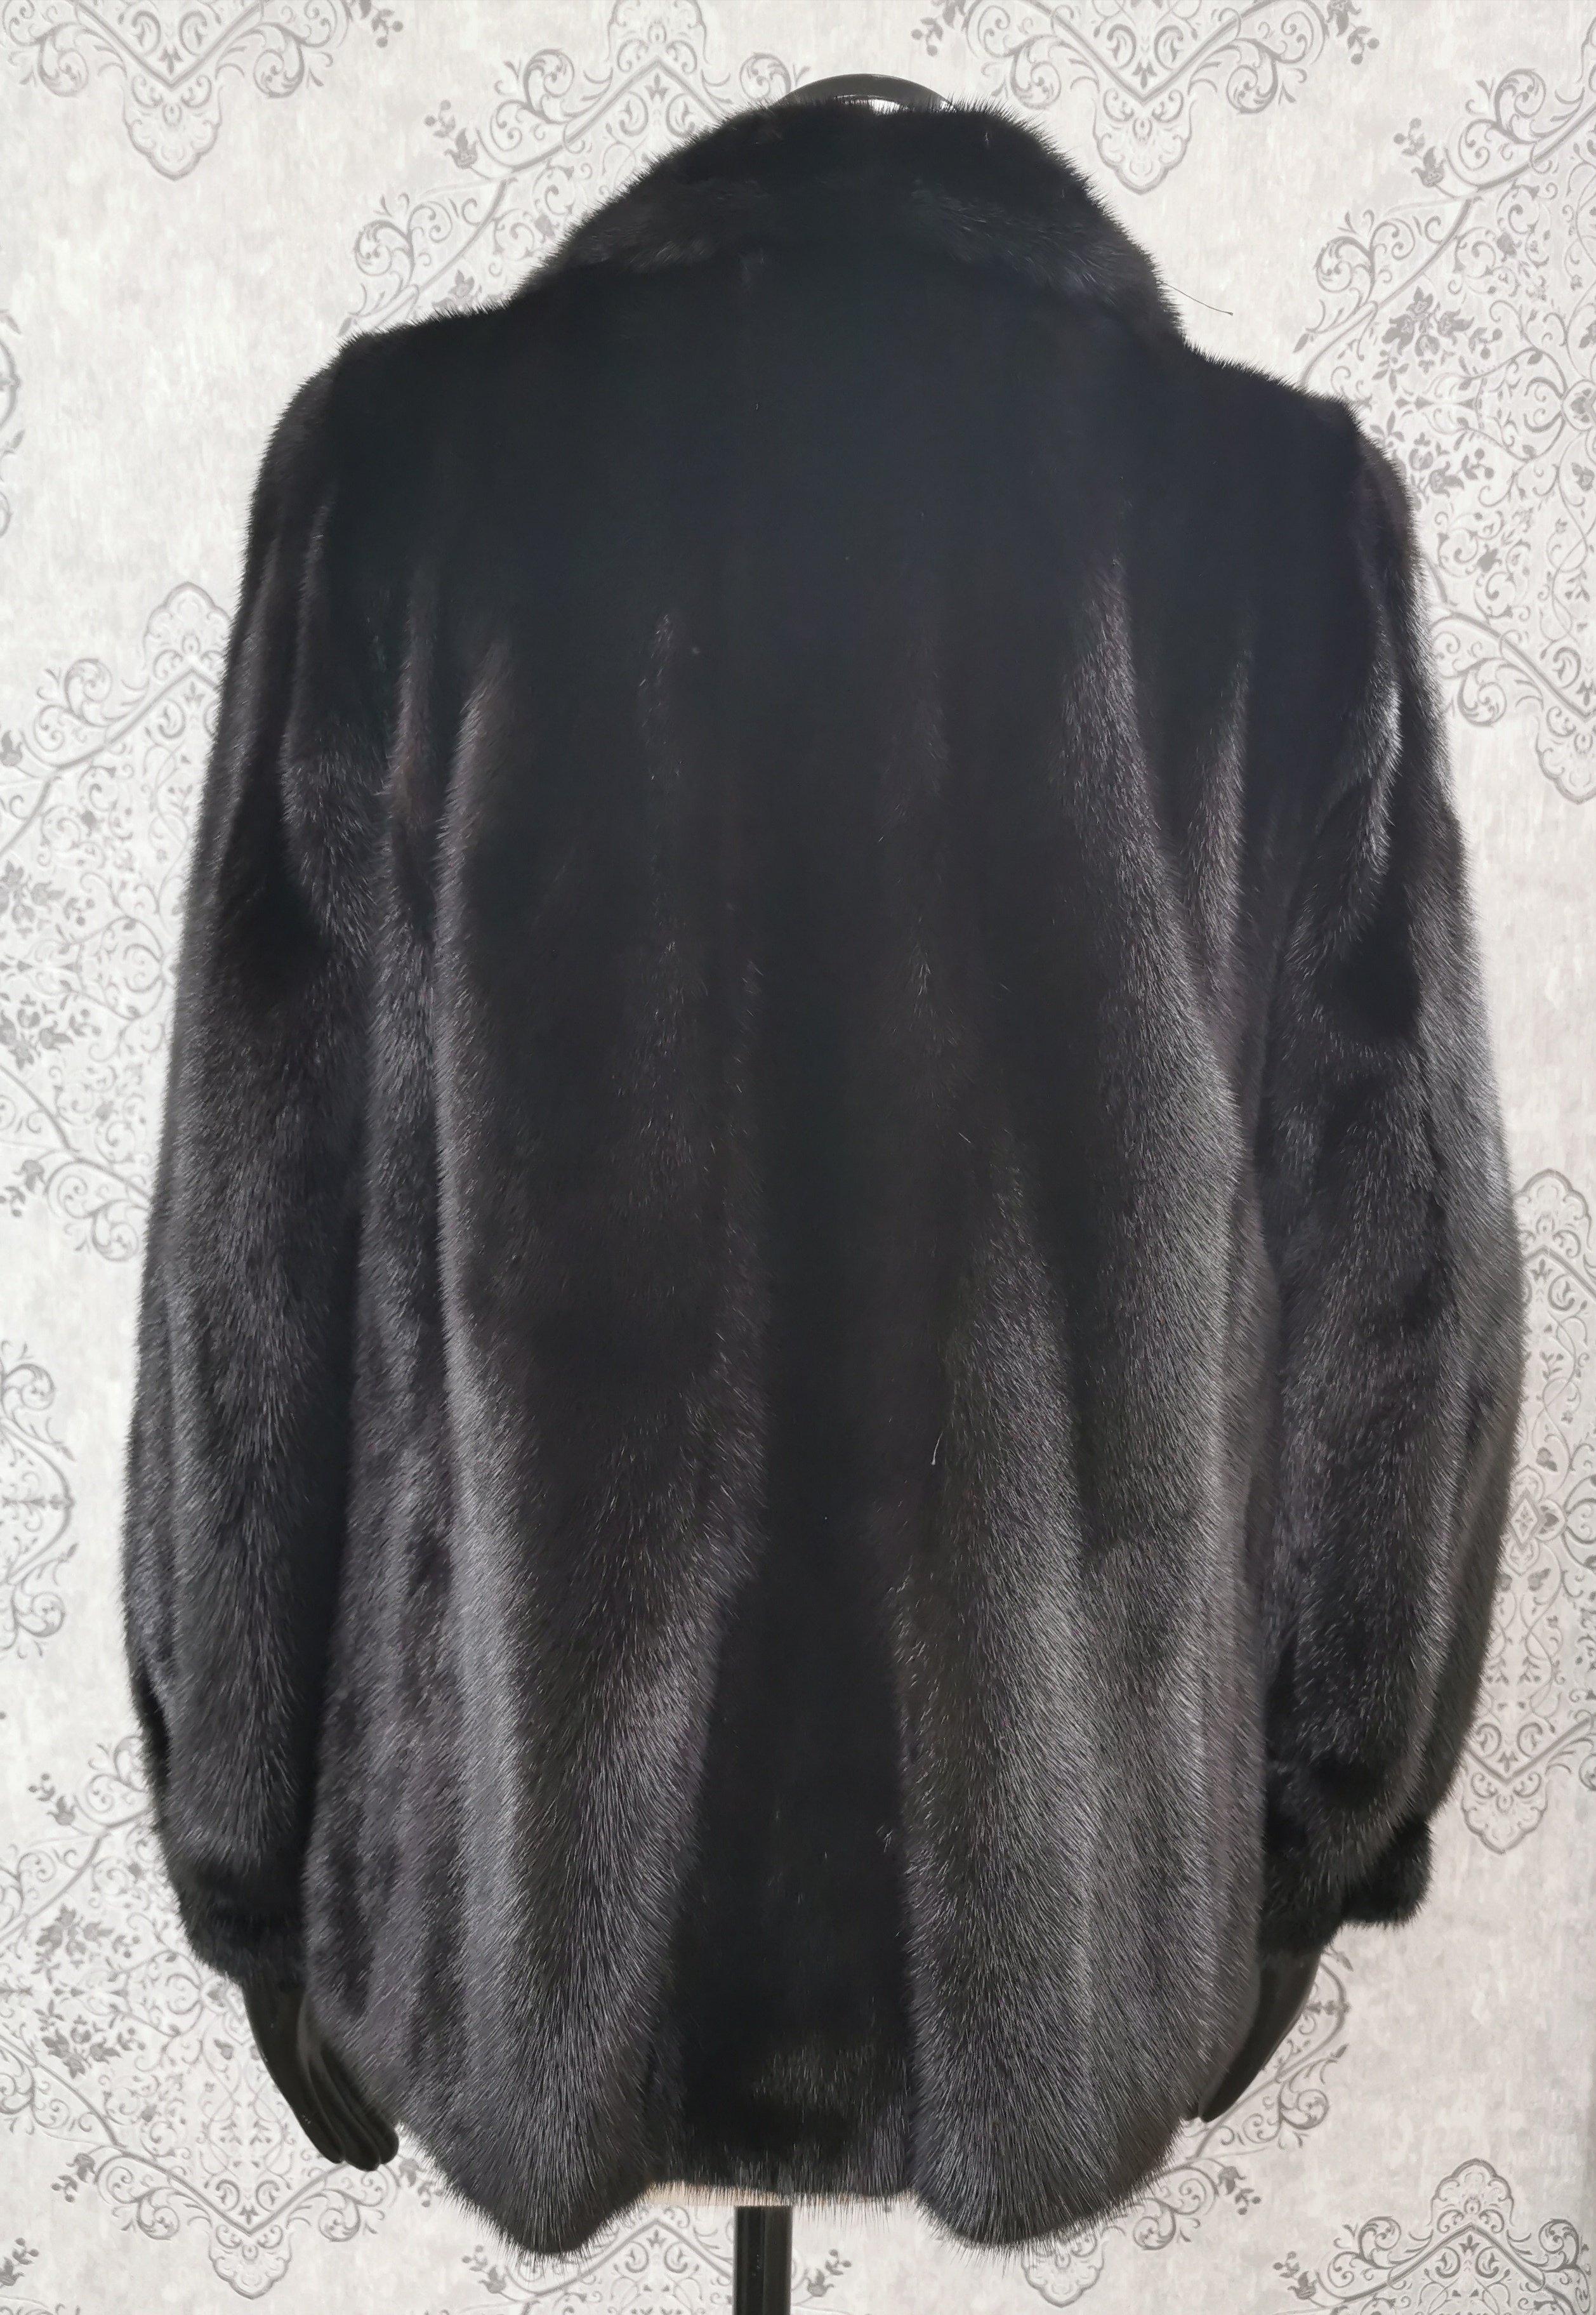  Brand new Saga mink fur coat size 12 2